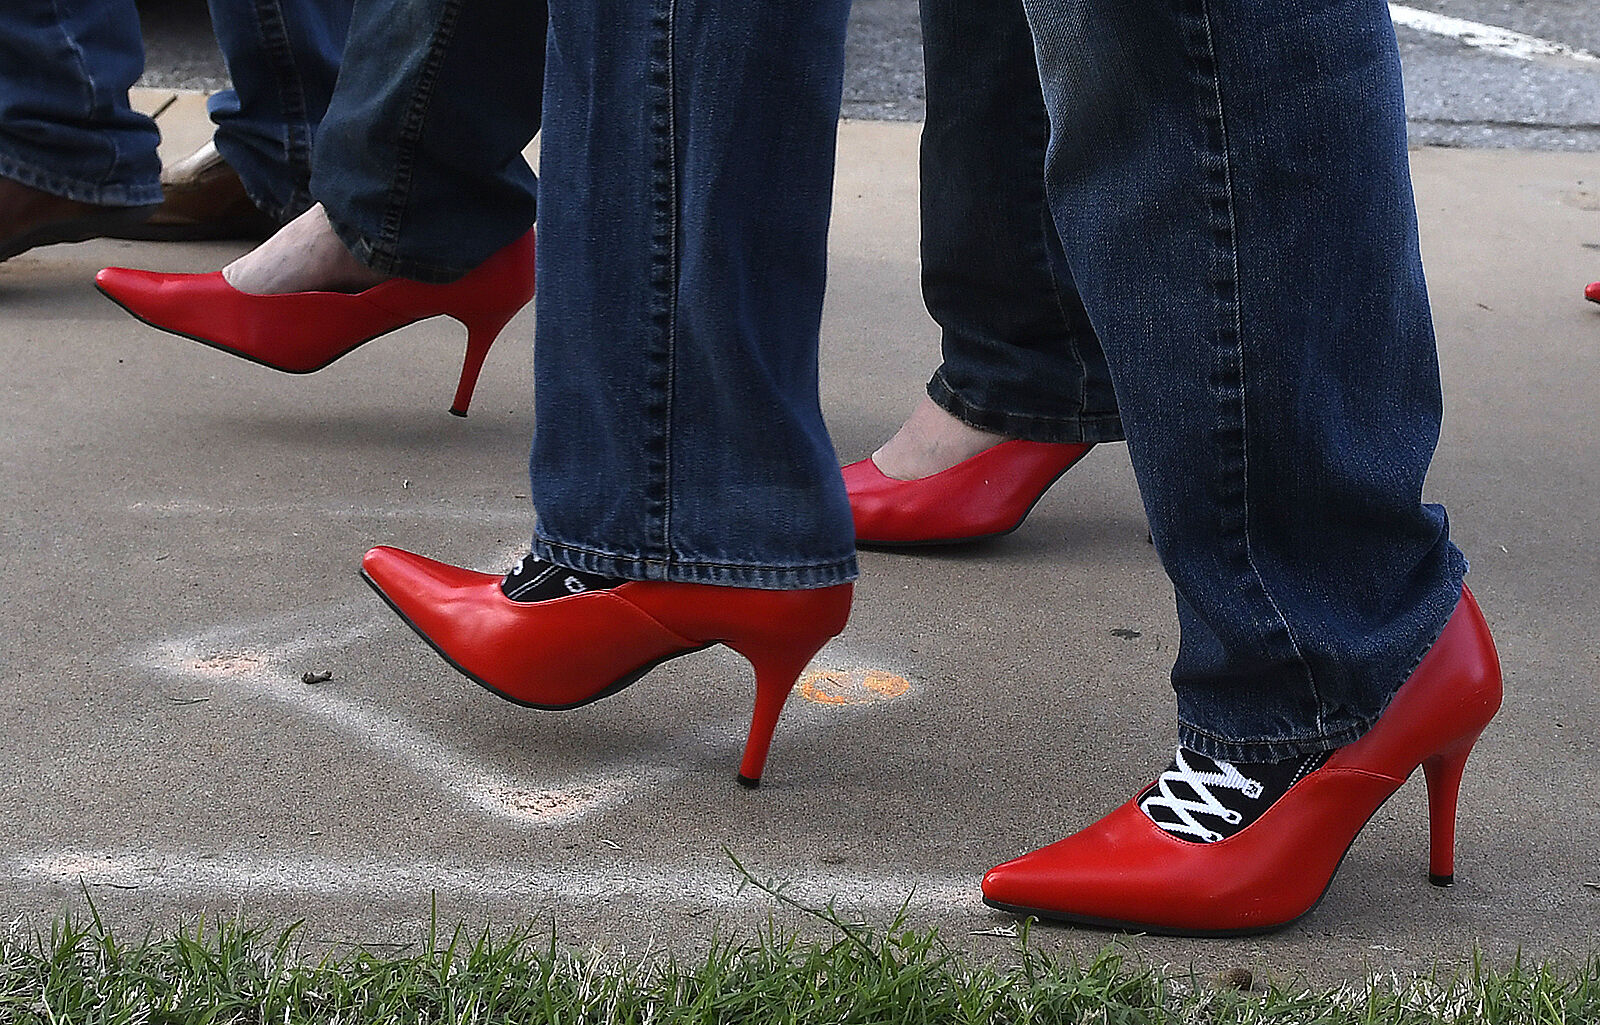 Can men wear women's high heel shoes? - Quora